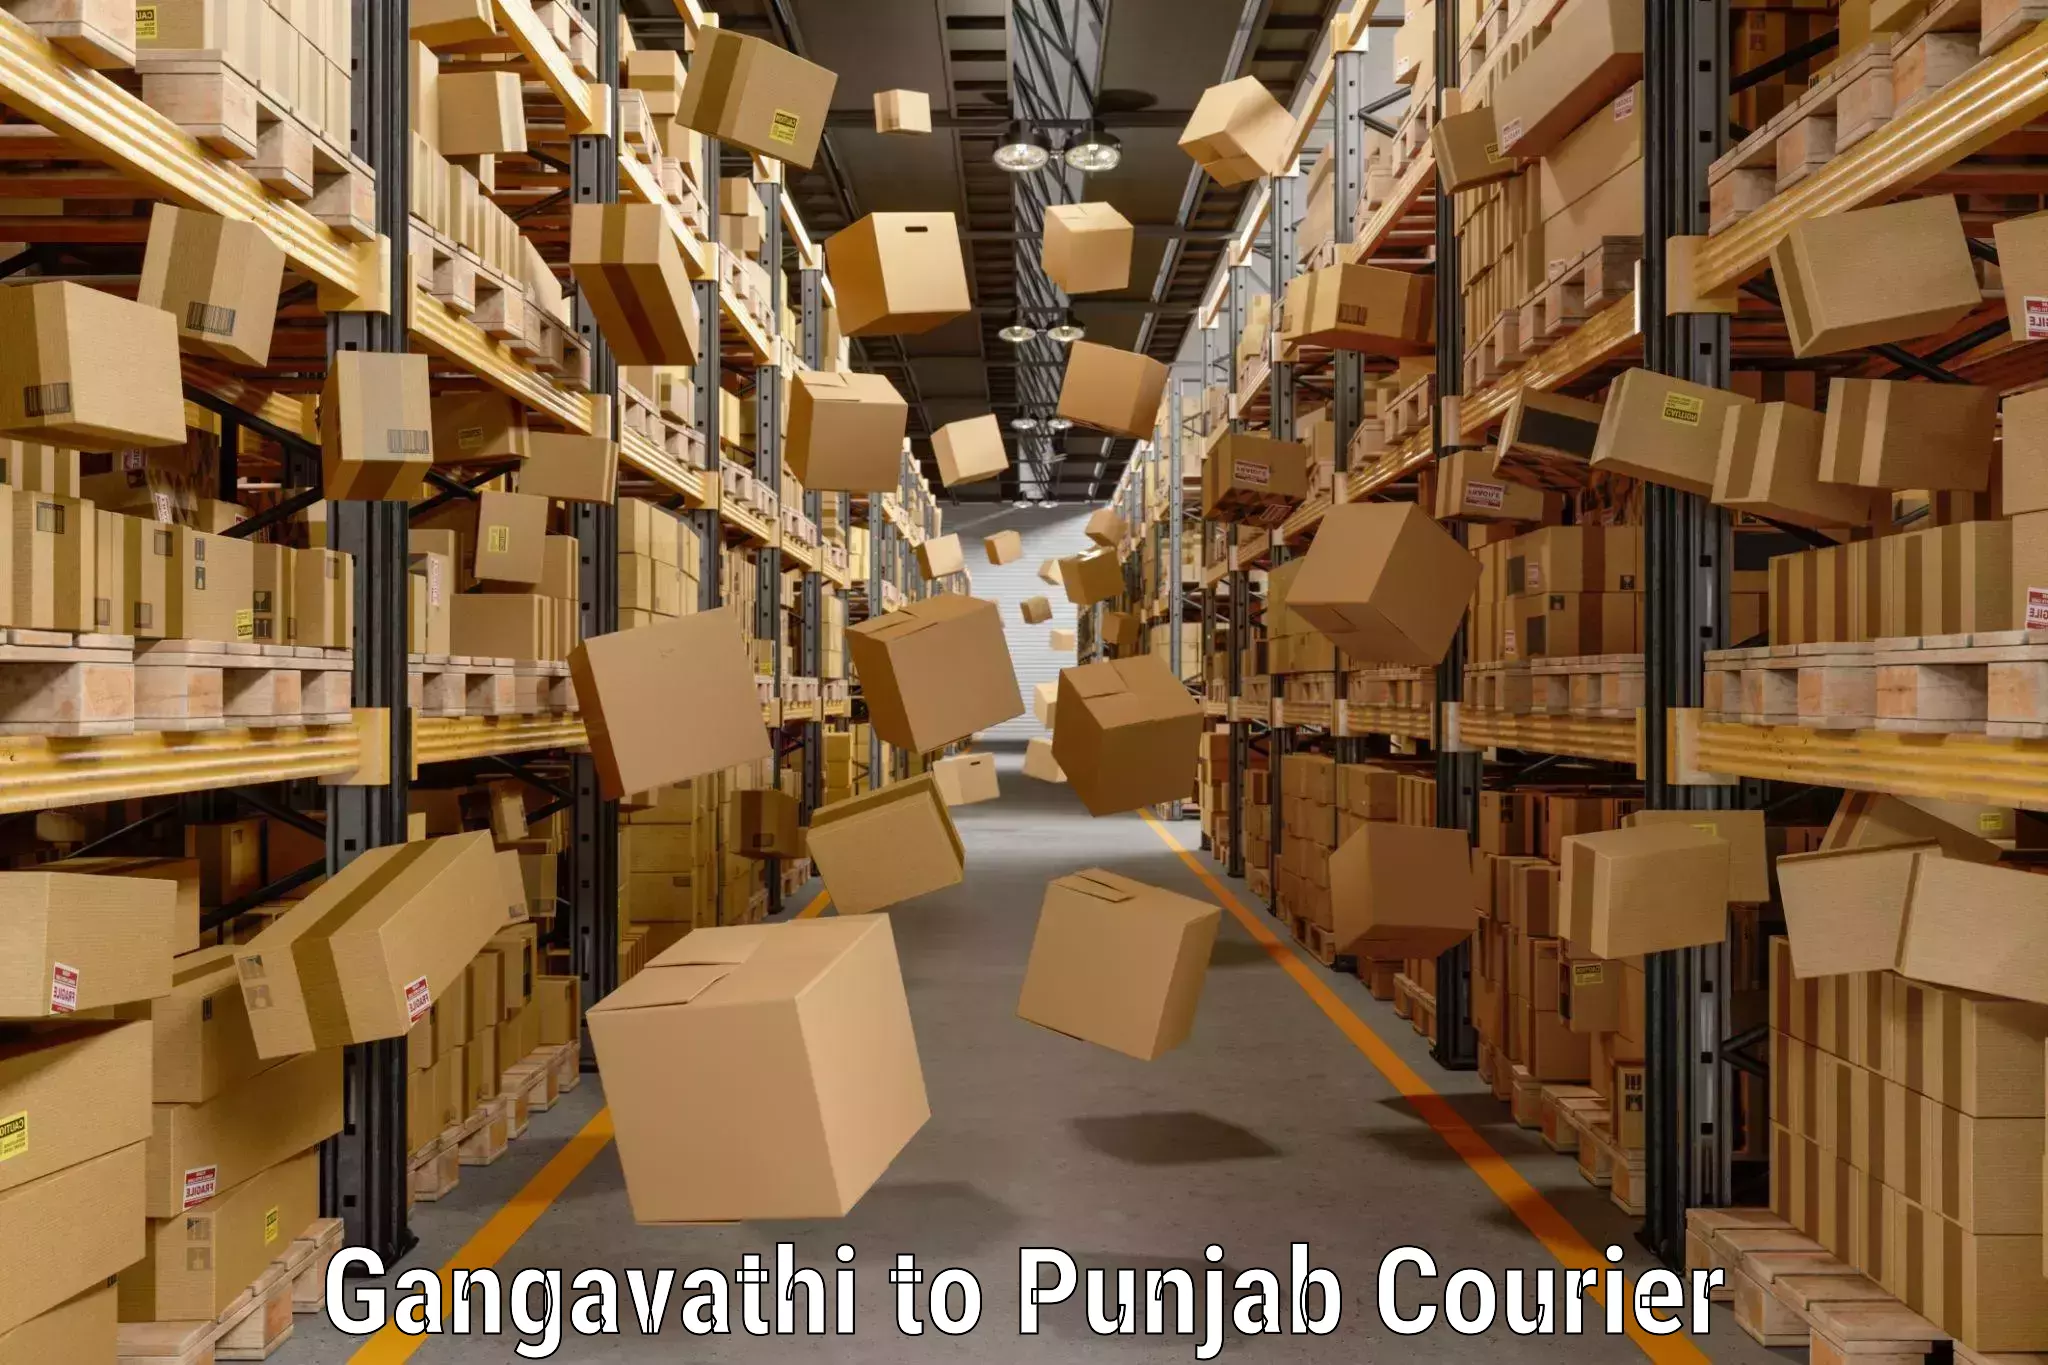 Baggage transport innovation Gangavathi to Punjab